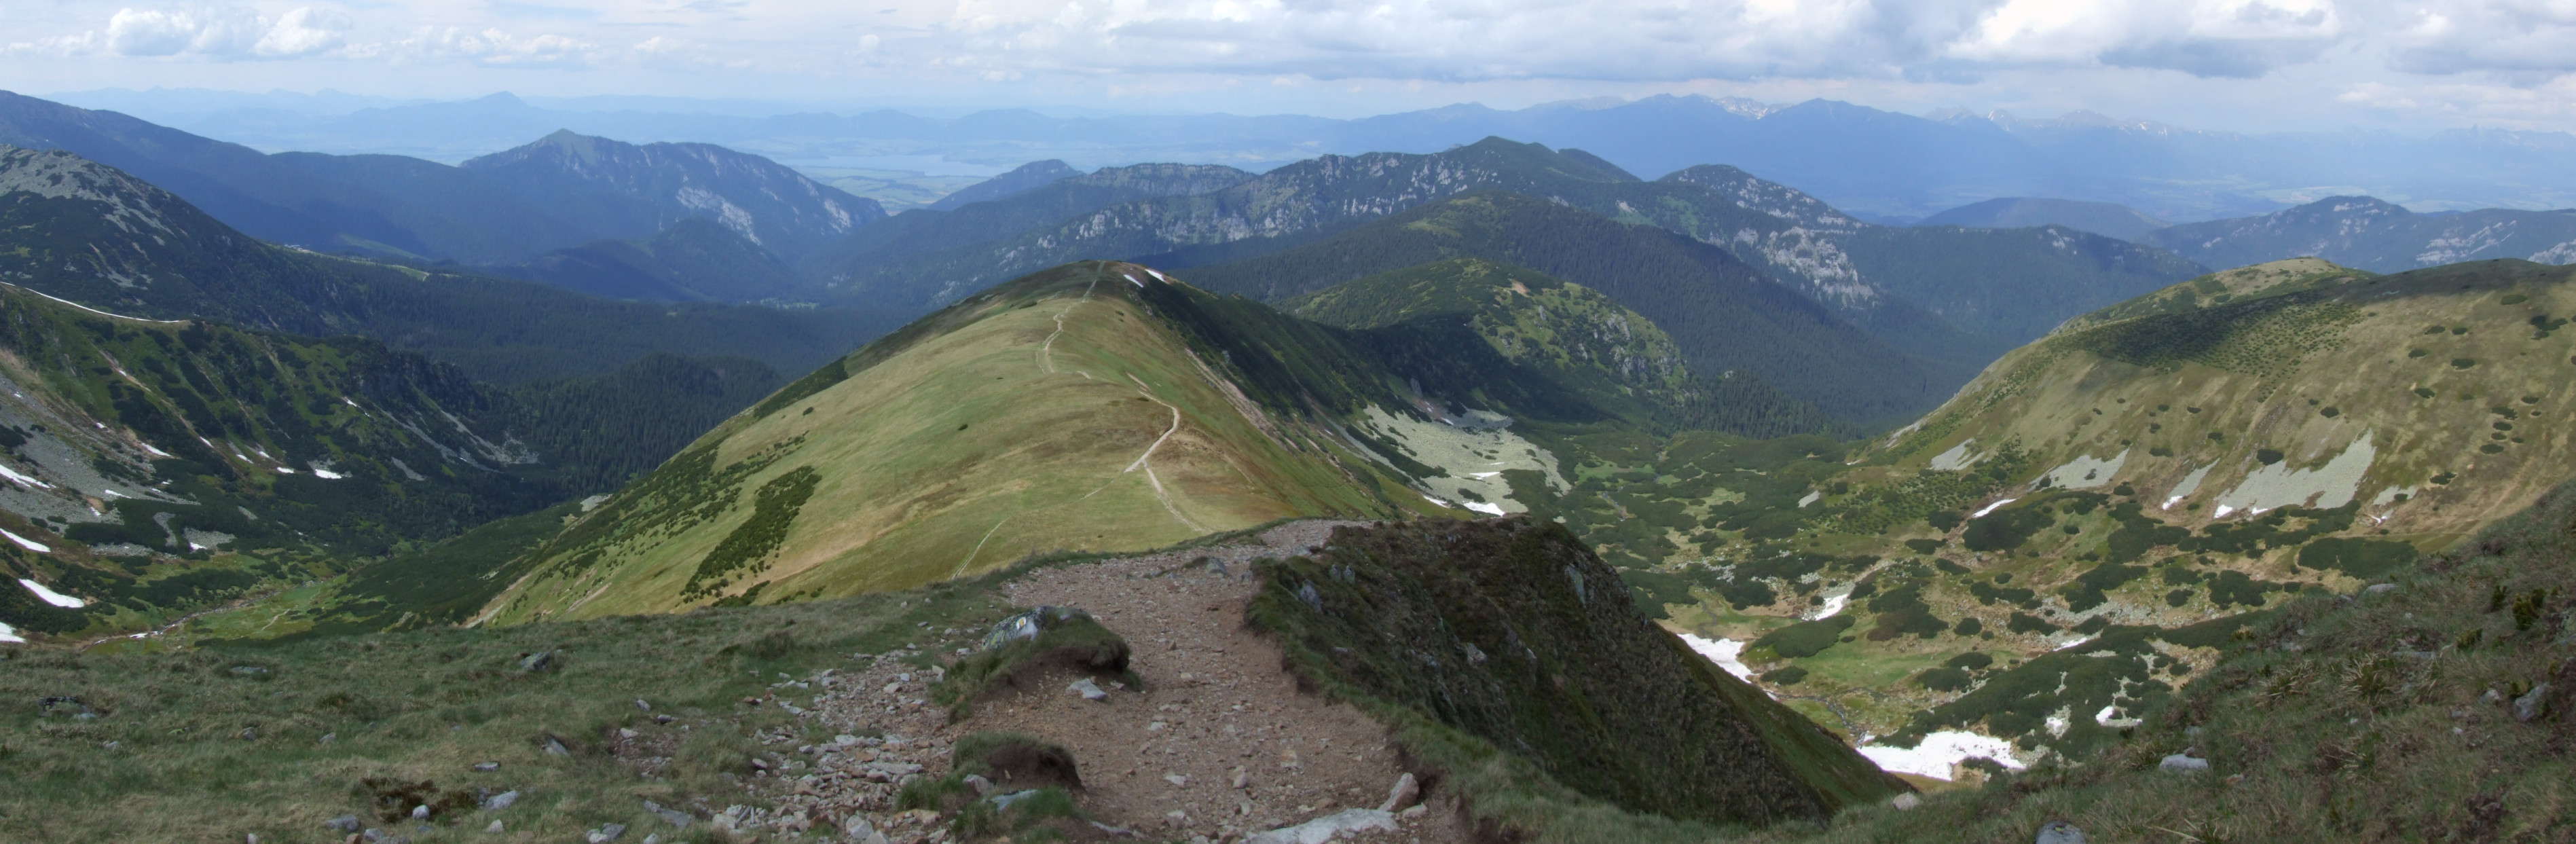 Nizke tatry - panorama from Krúpova hoľa